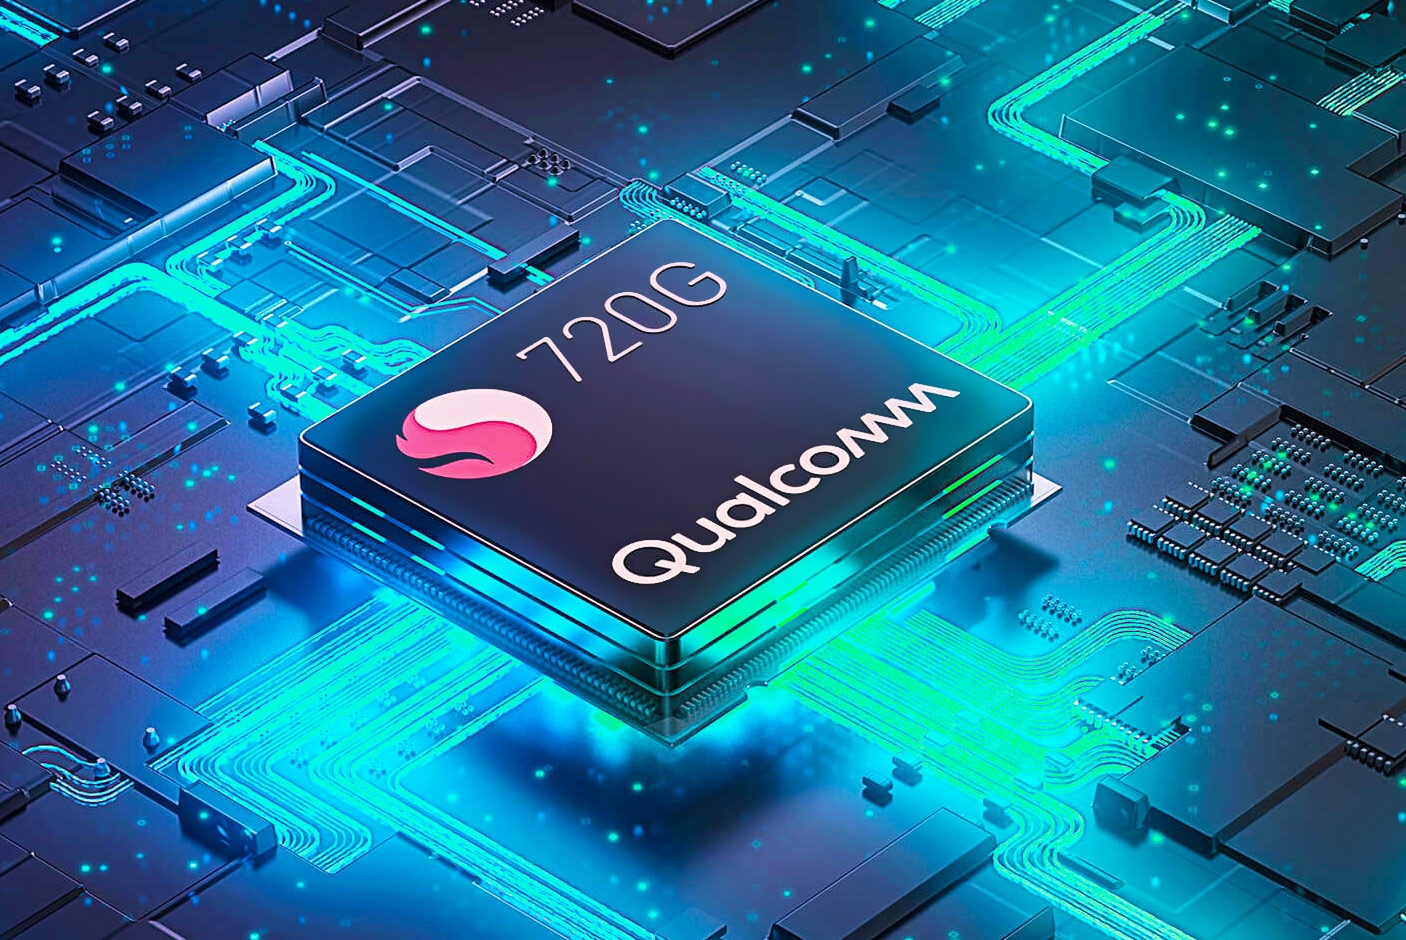 processor Qualcomm Snapdragon 720G